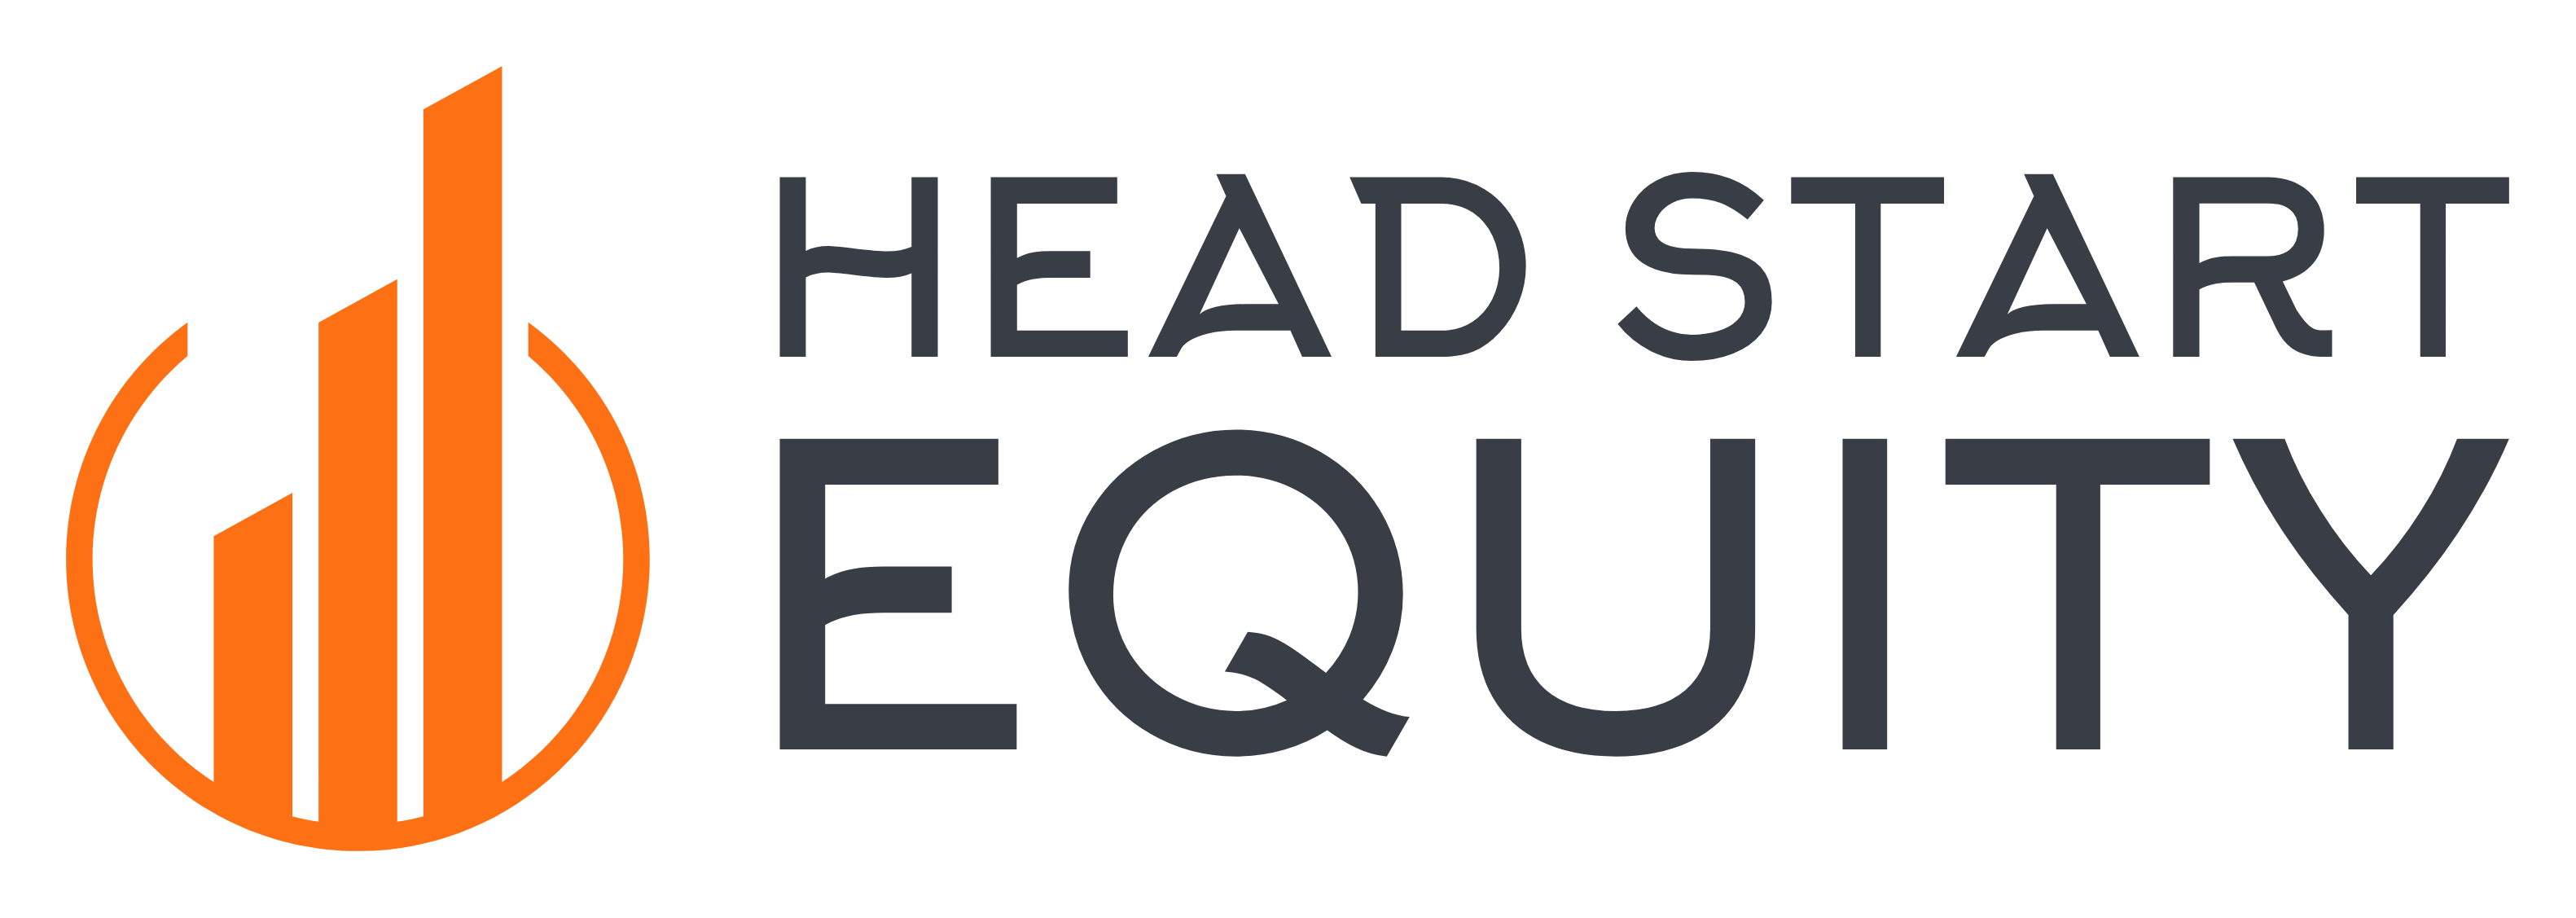 Head Start Equity + Rocket Dollar